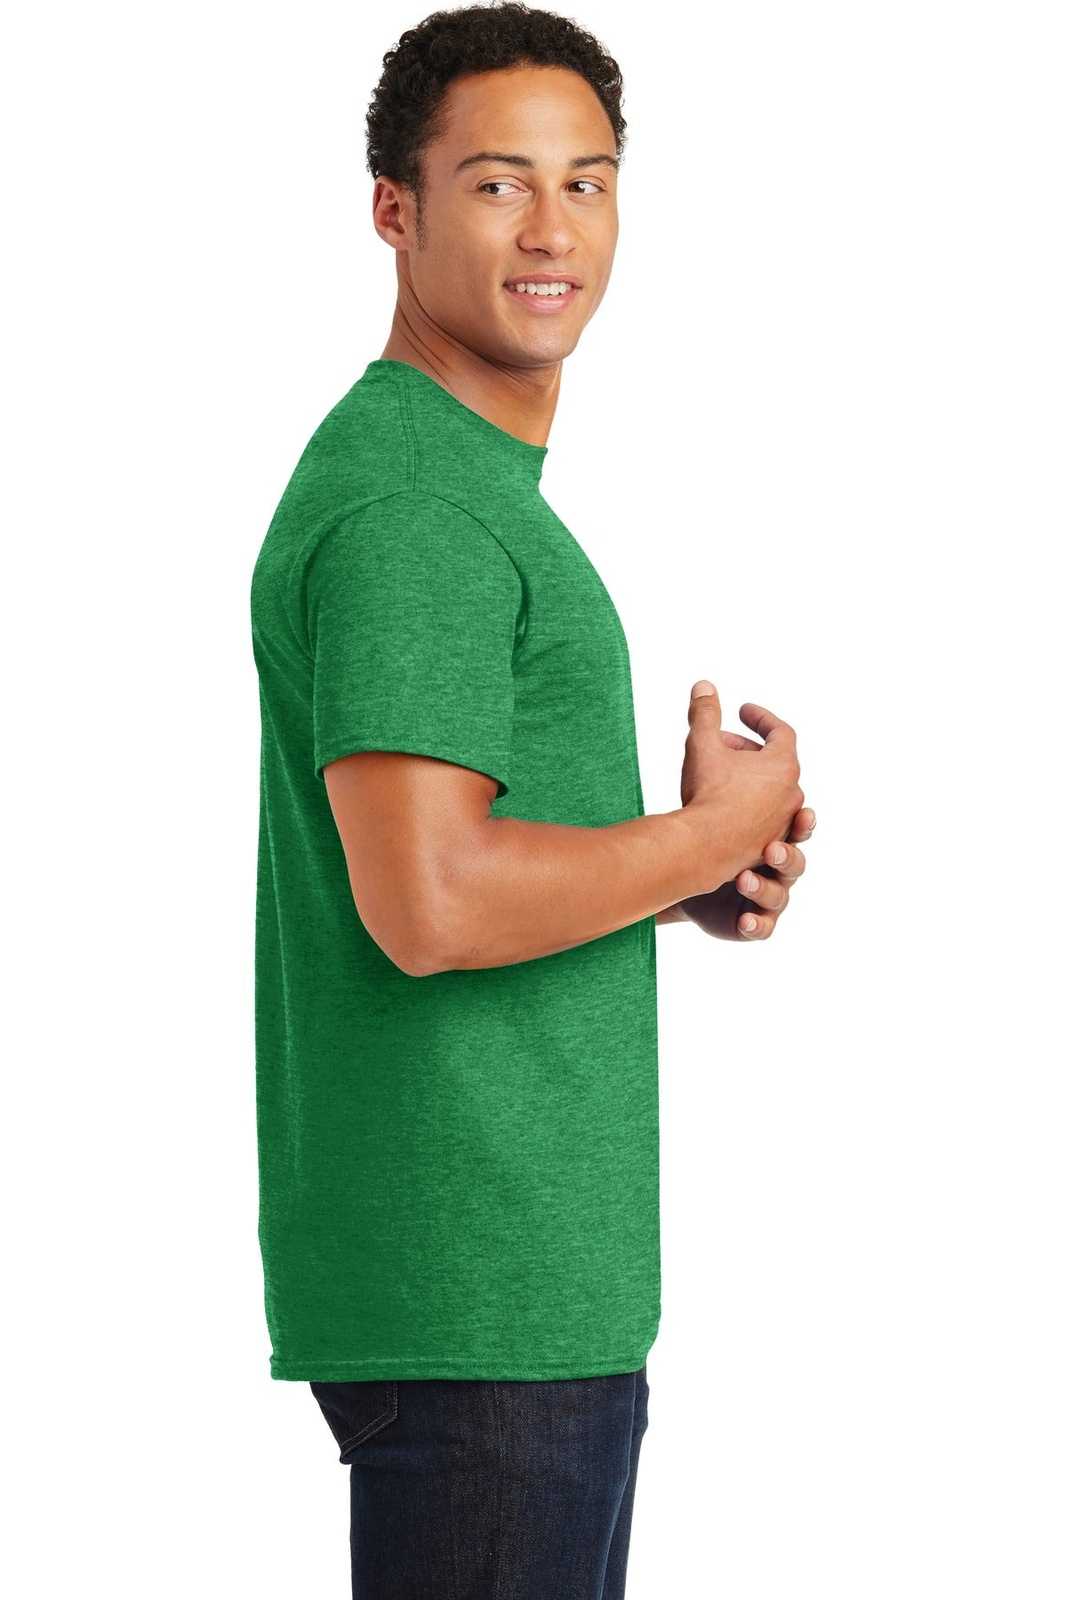 Gildan 2000 Ultra Cotton 100% Cotton T-Shirt - Antique Irish Green - HIT a Double